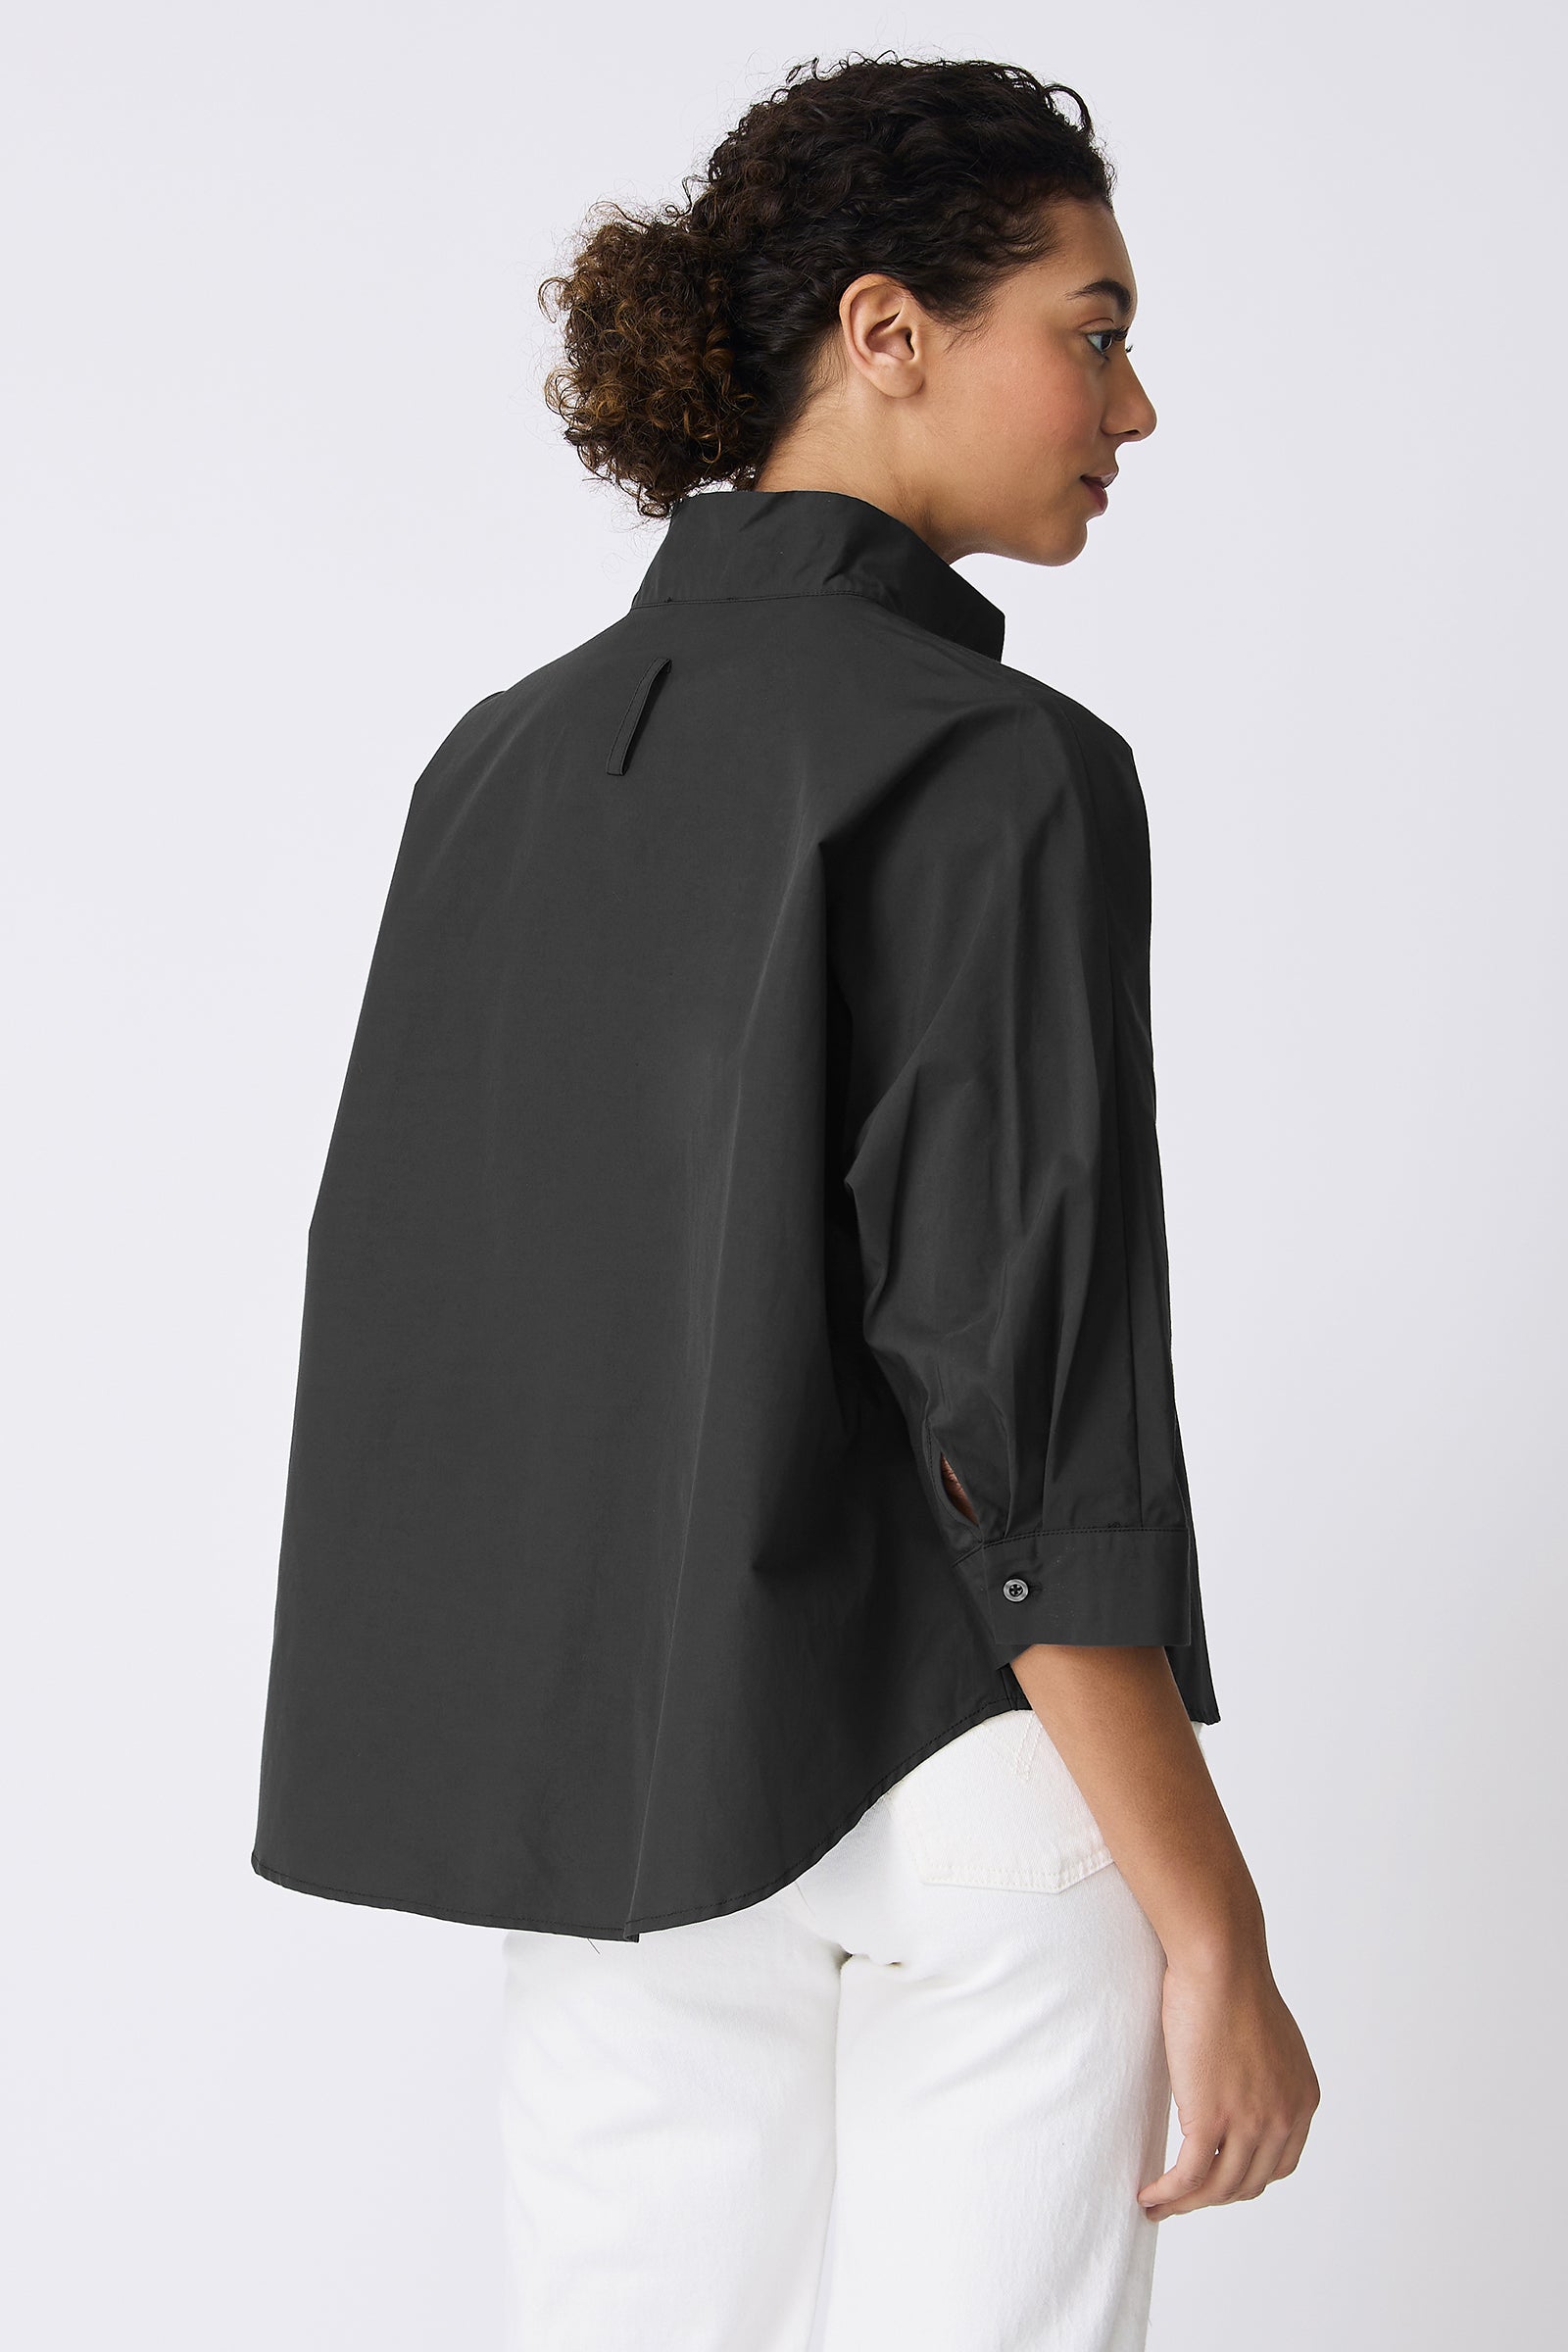 Kal Rieman Avi Shirt in Black on model back view